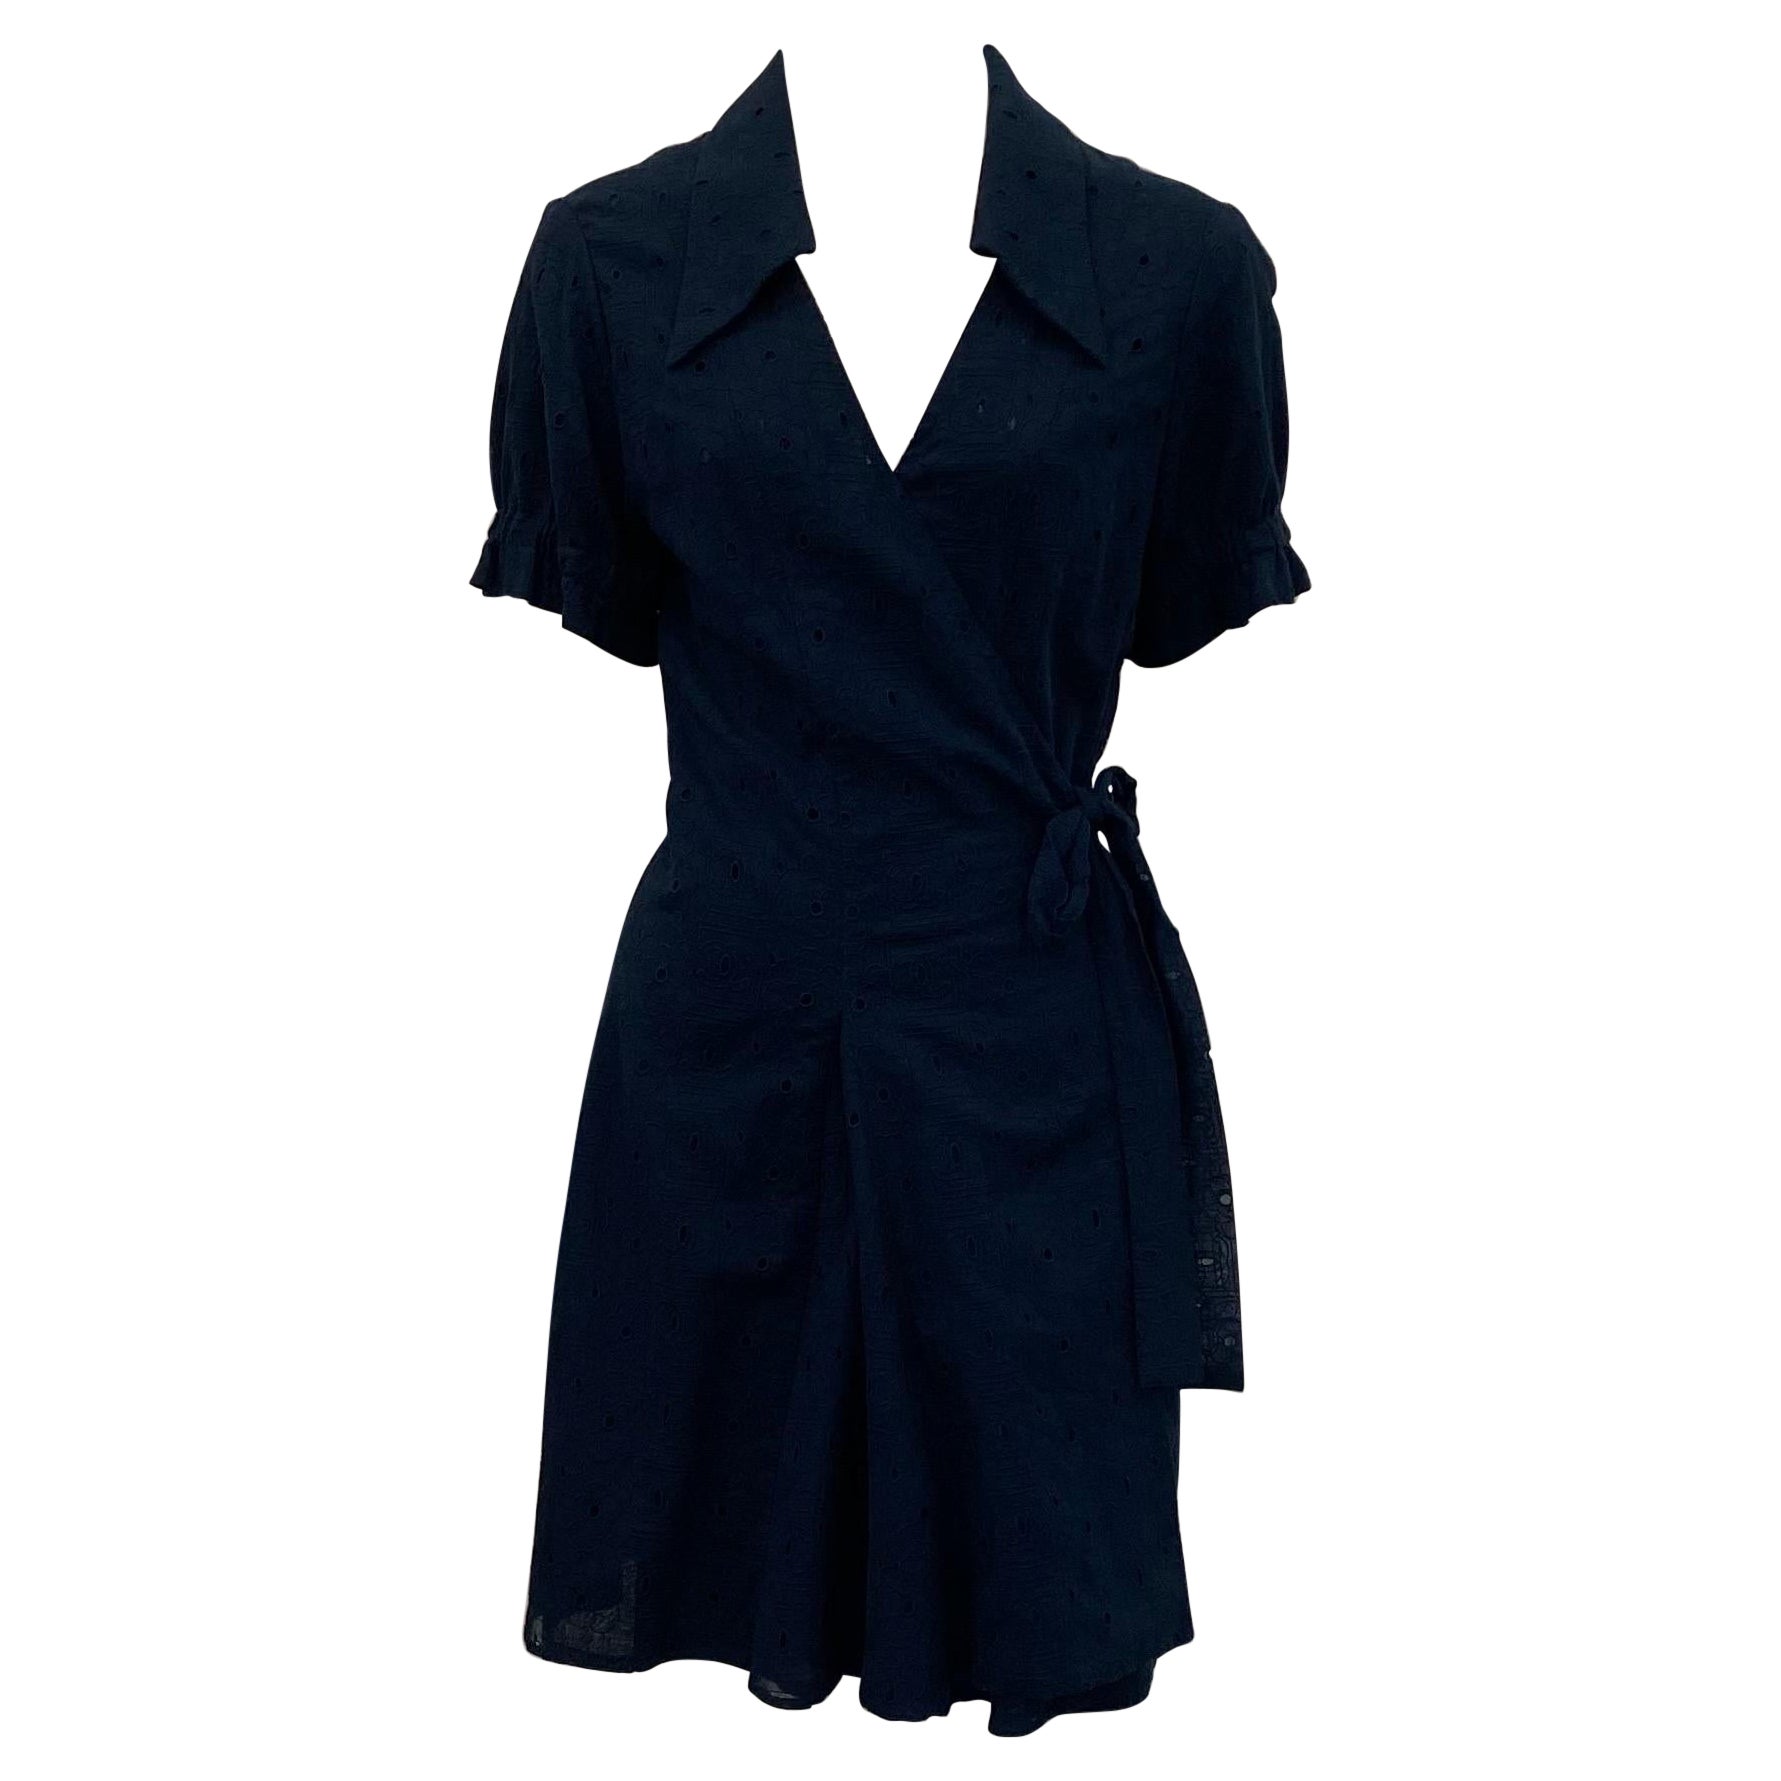 Chanel Navy Cotton Eyelet Wrap Dress - Sz 42 - 07P Collection